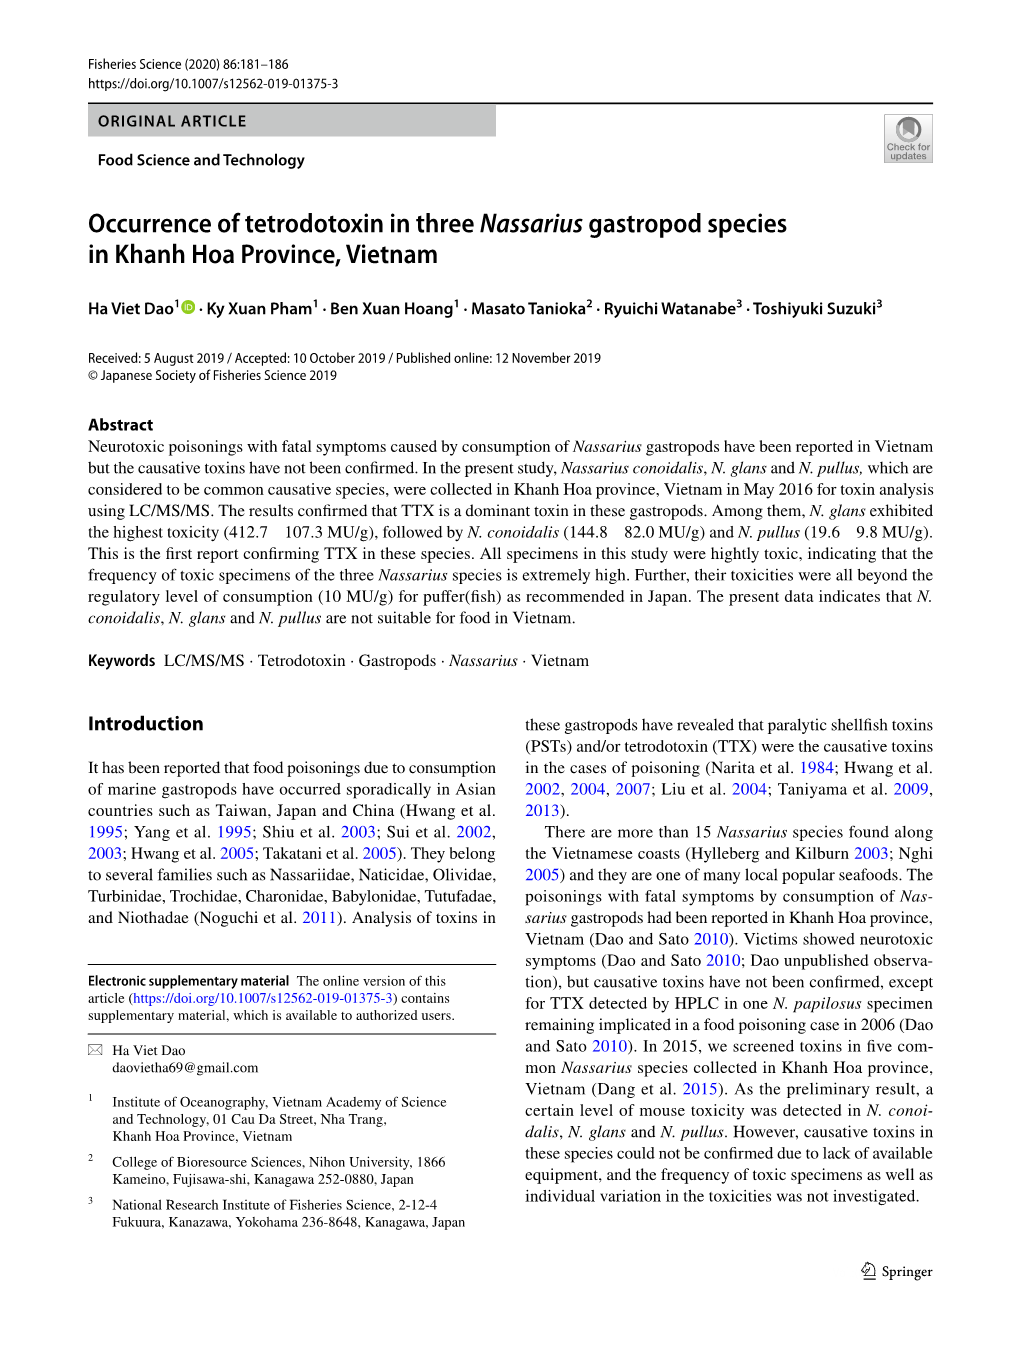 Occurrence of Tetrodotoxin in Three Nassarius Gastropod Species in Khanh Hoa Province, Vietnam